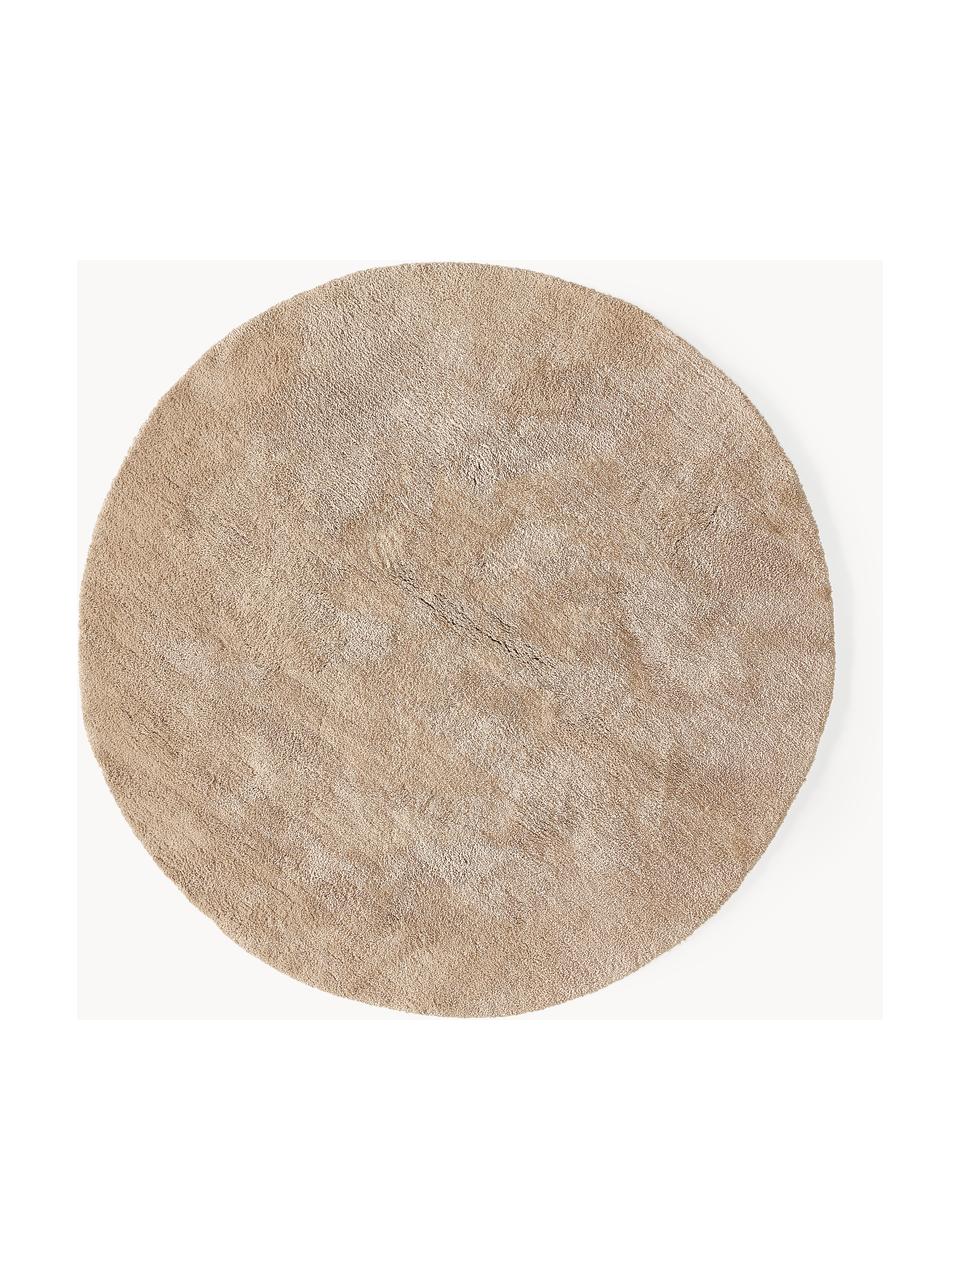 Pluizig rond hoogpolig vloerkleed Leighton, Microvezels (100% polyester, GRS-gecertificeerd), Nougat, Ø 120 cm (maat S)